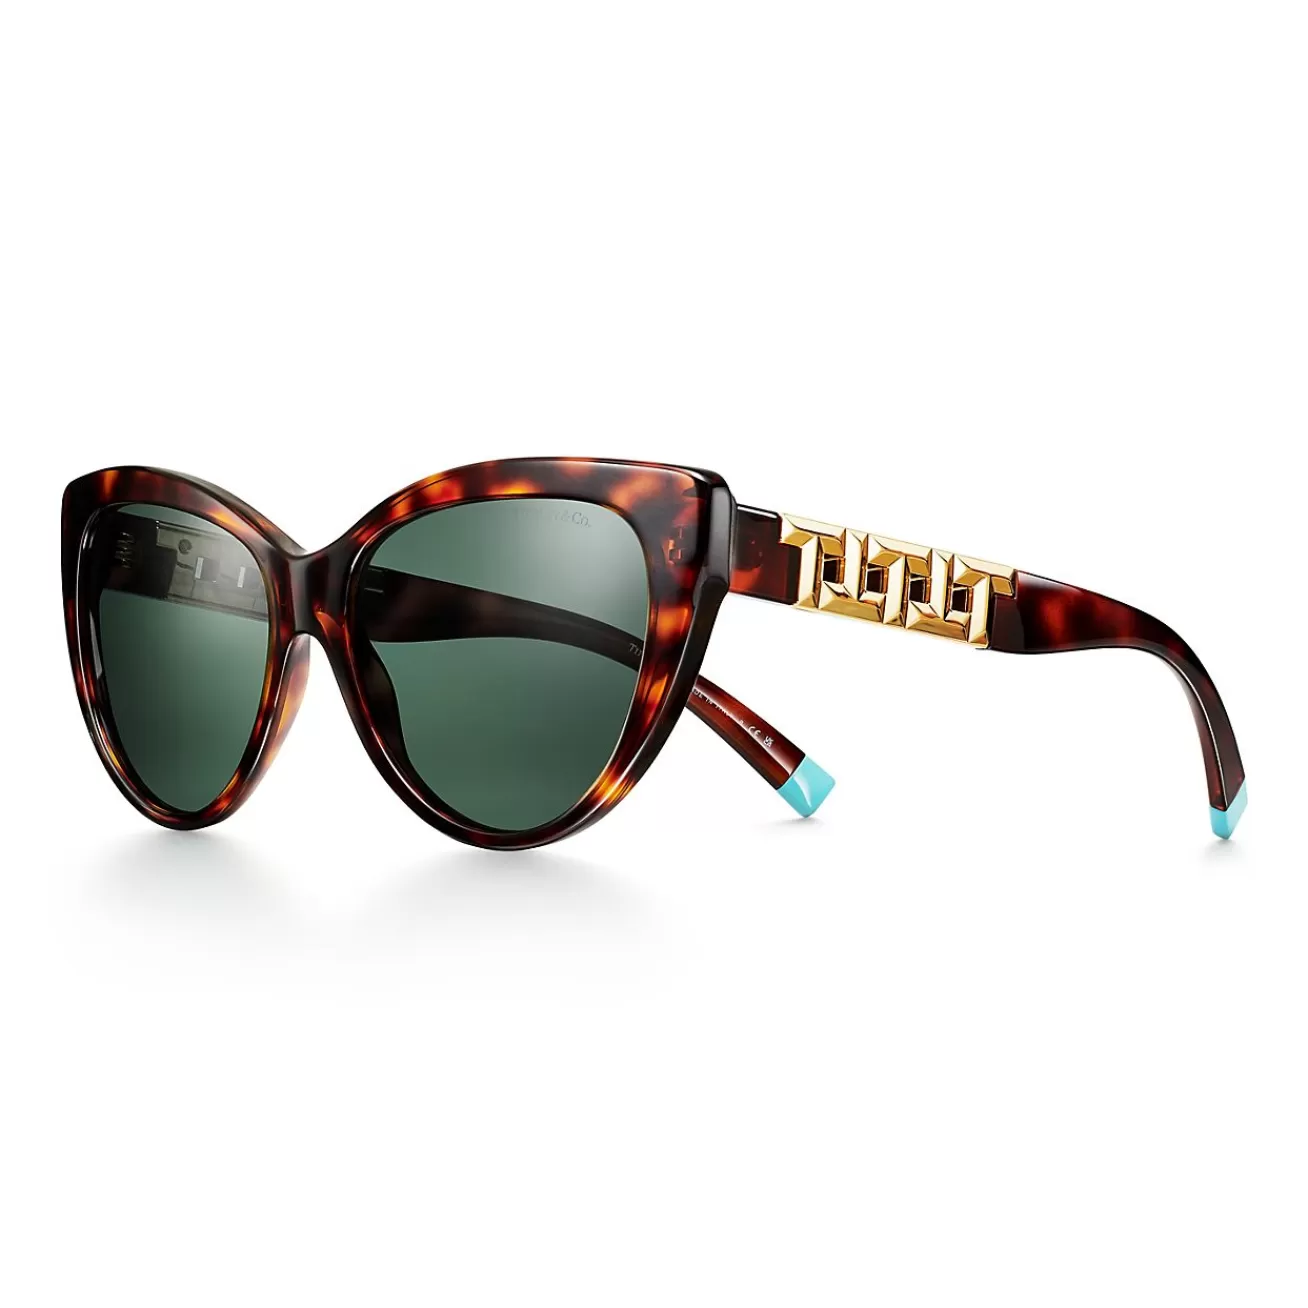 Tiffany & Co. Tiffany T Sunglasses in Tortoise Acetate with Dark Green Lenses | ^Women Tiffany T | Sunglasses